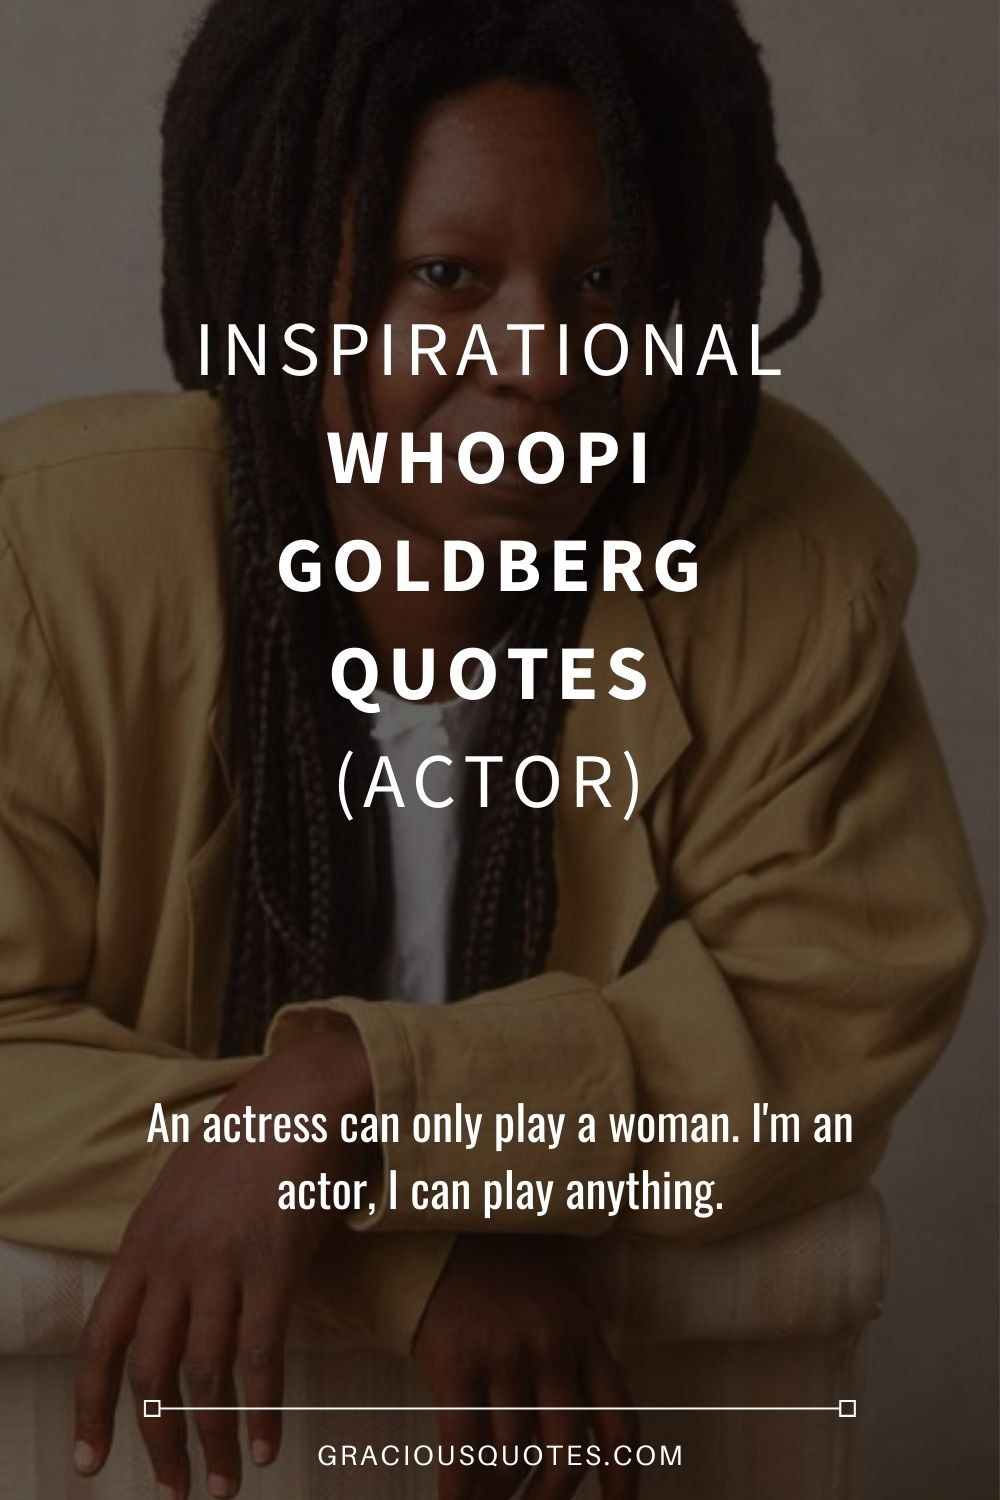 Inspirational Whoopi Goldberg Quotes (ACTOR) - Gracious Quotes